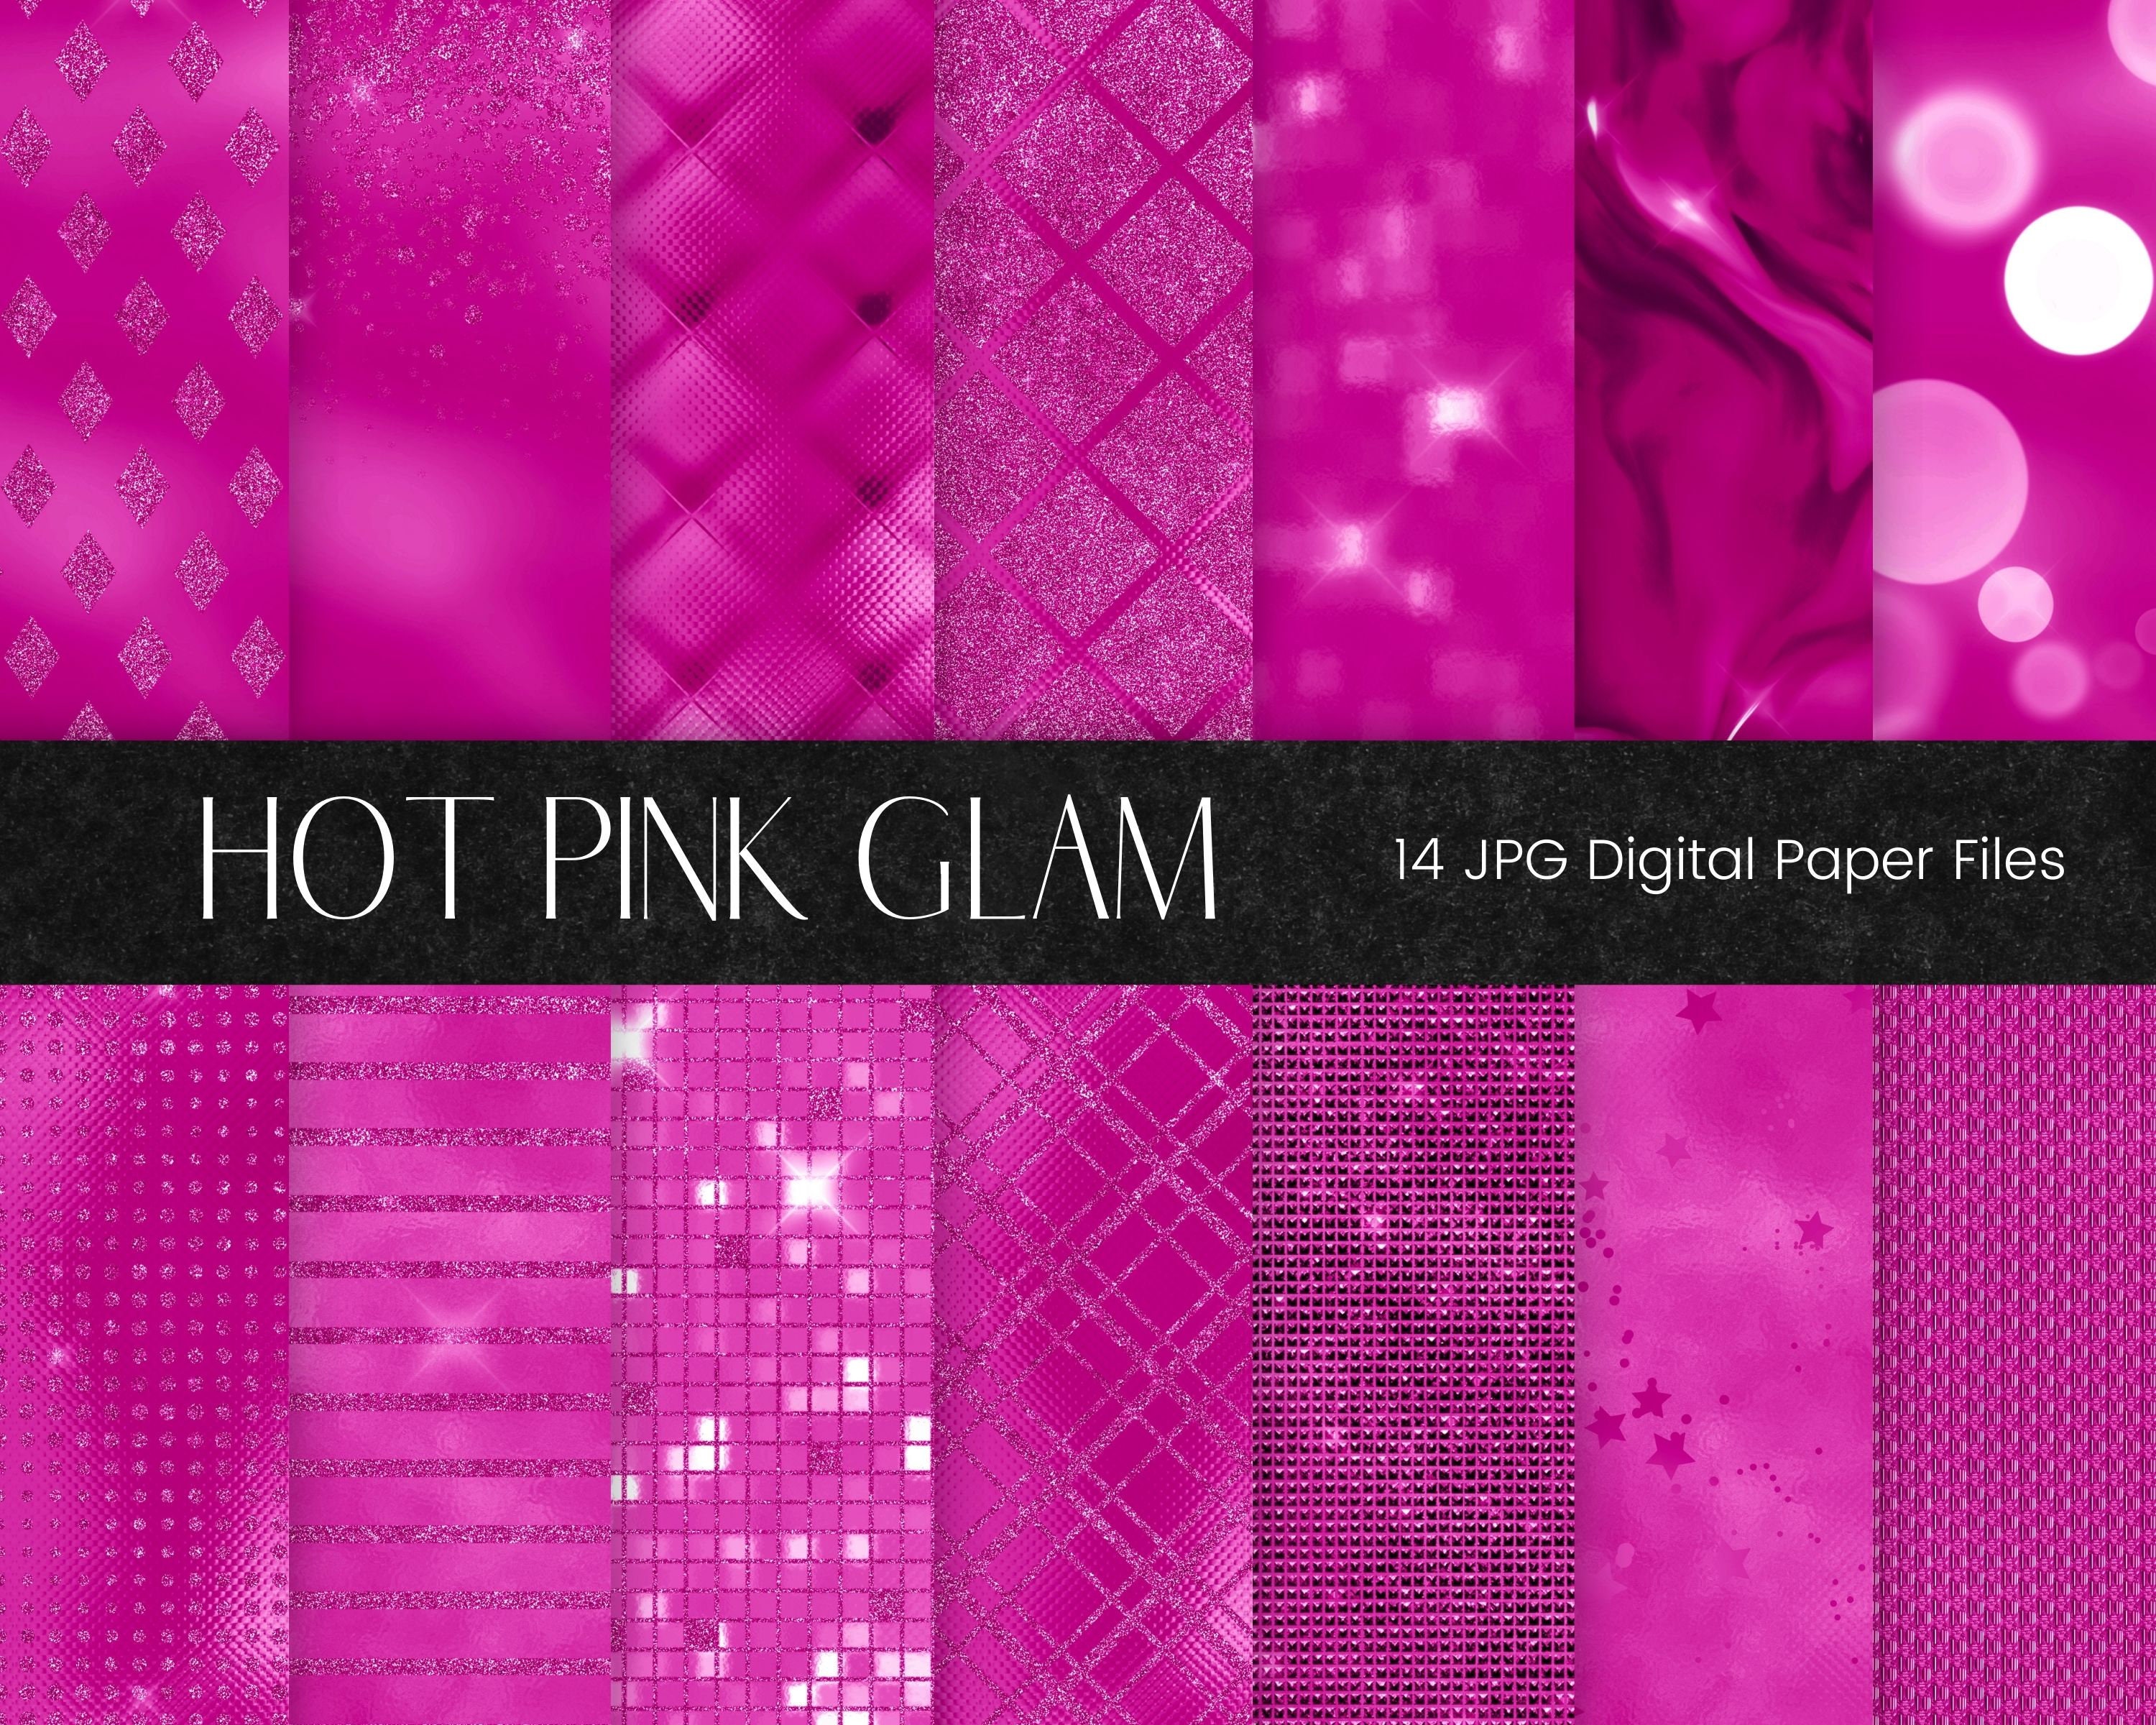 #099 Glitter textures Diamond textures Sparkling glitter Glam Pink Digital Paper Shiny metallic foil Luxury pink paper Glam textures